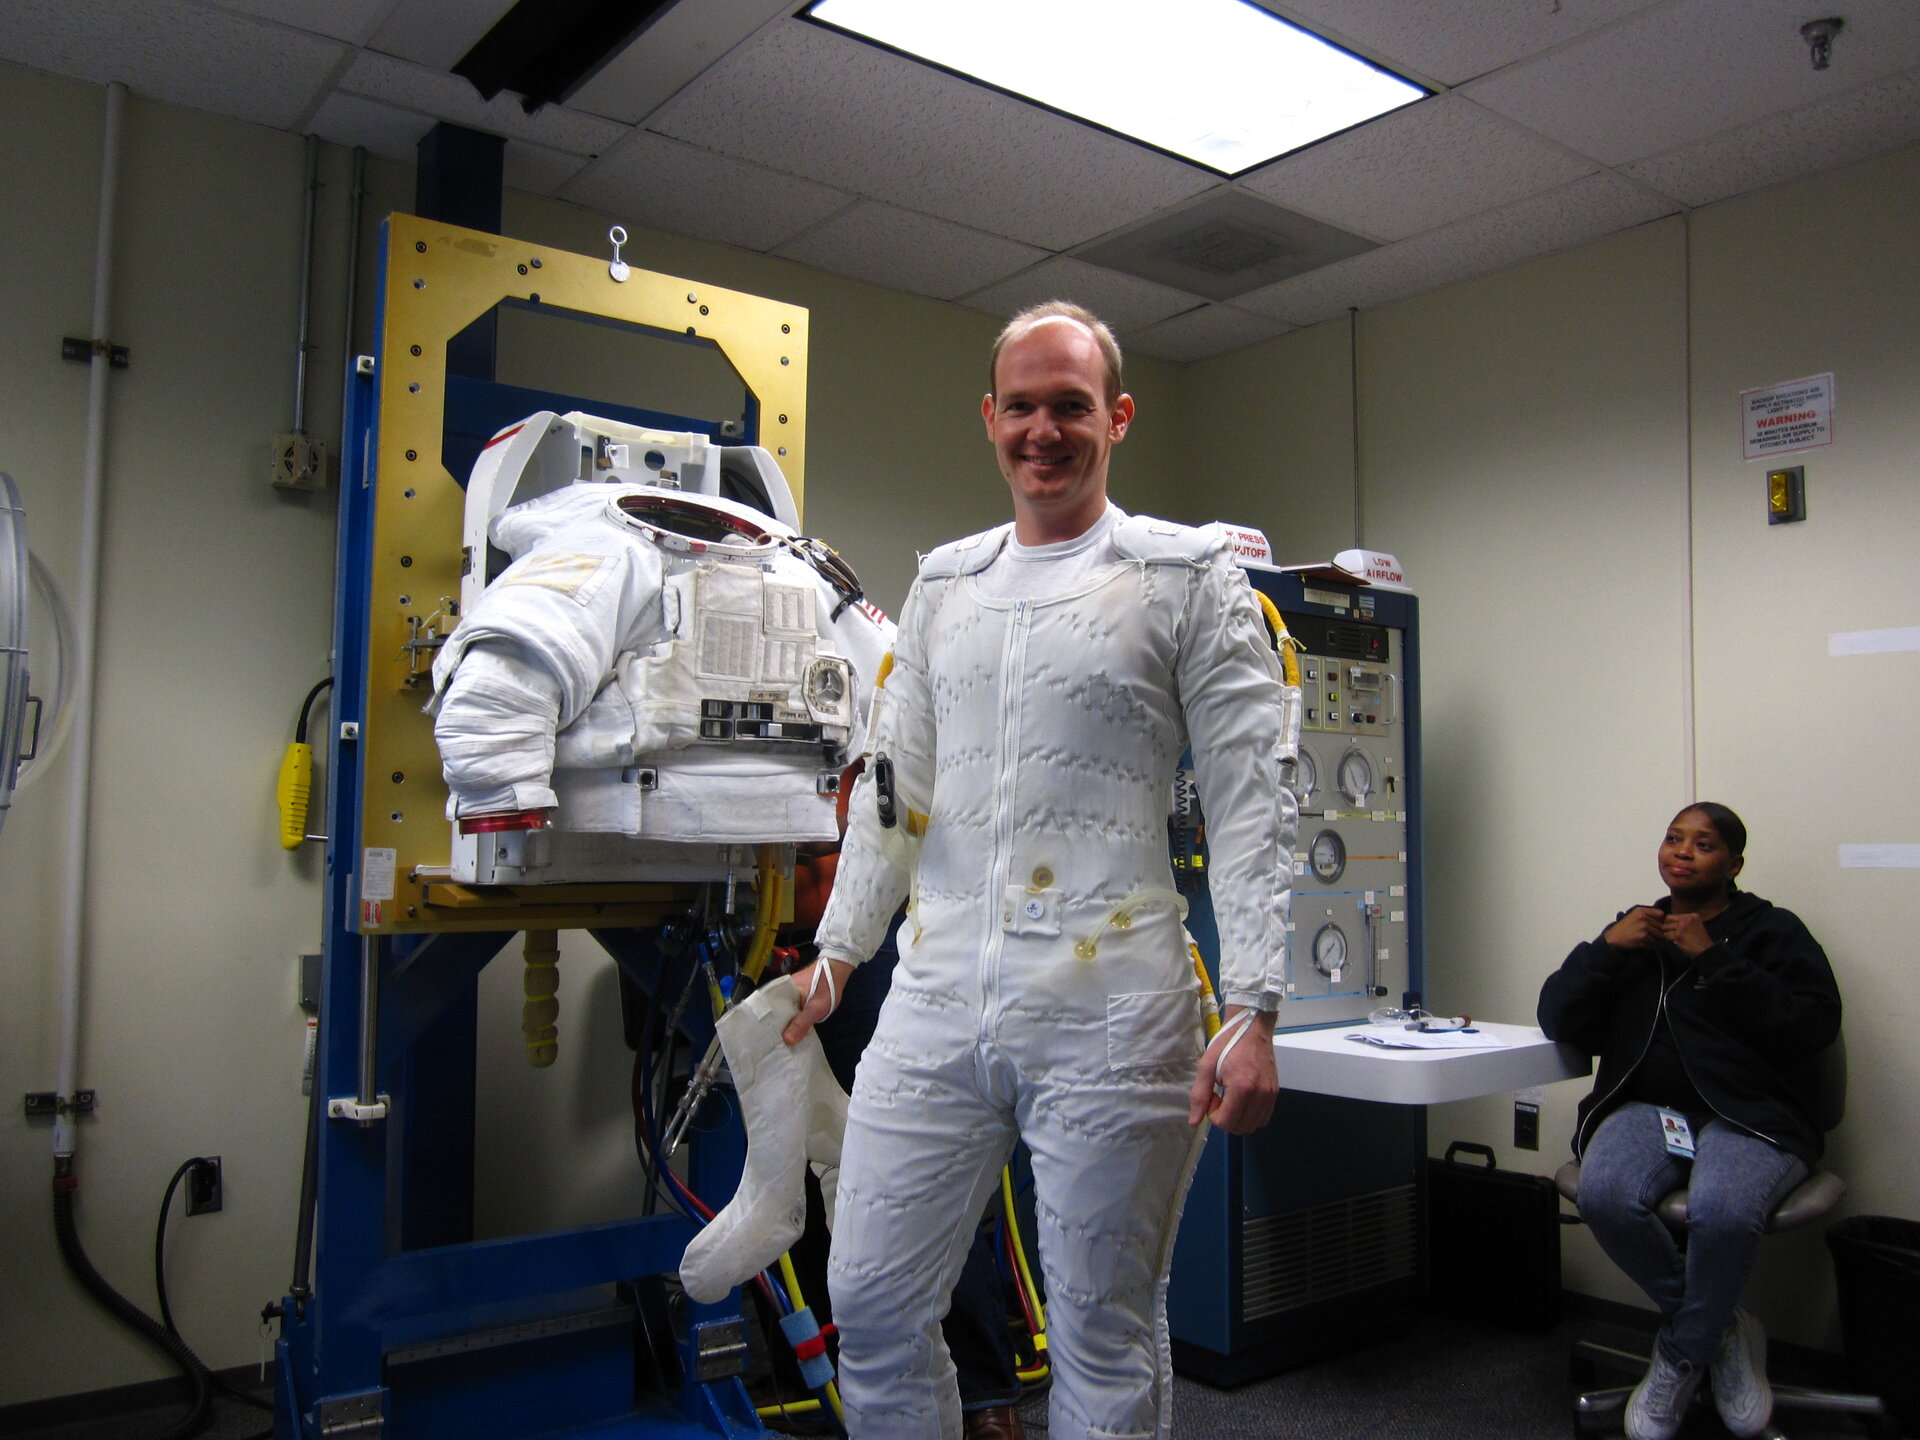 Alexander Gerst at a spacesuit test